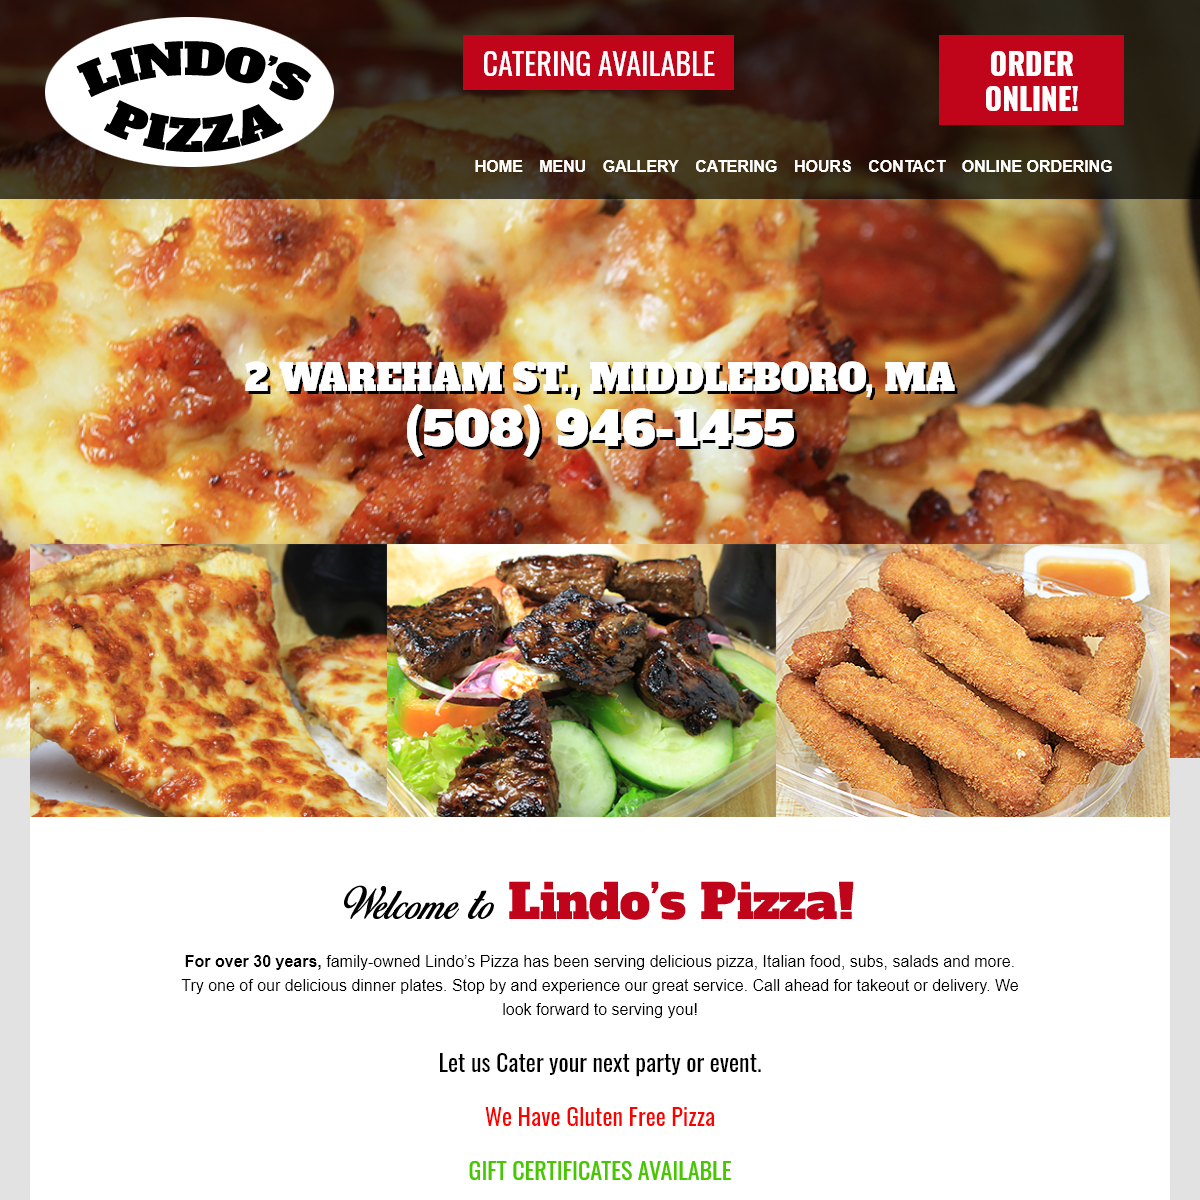 A complete backup of lindospizza.com